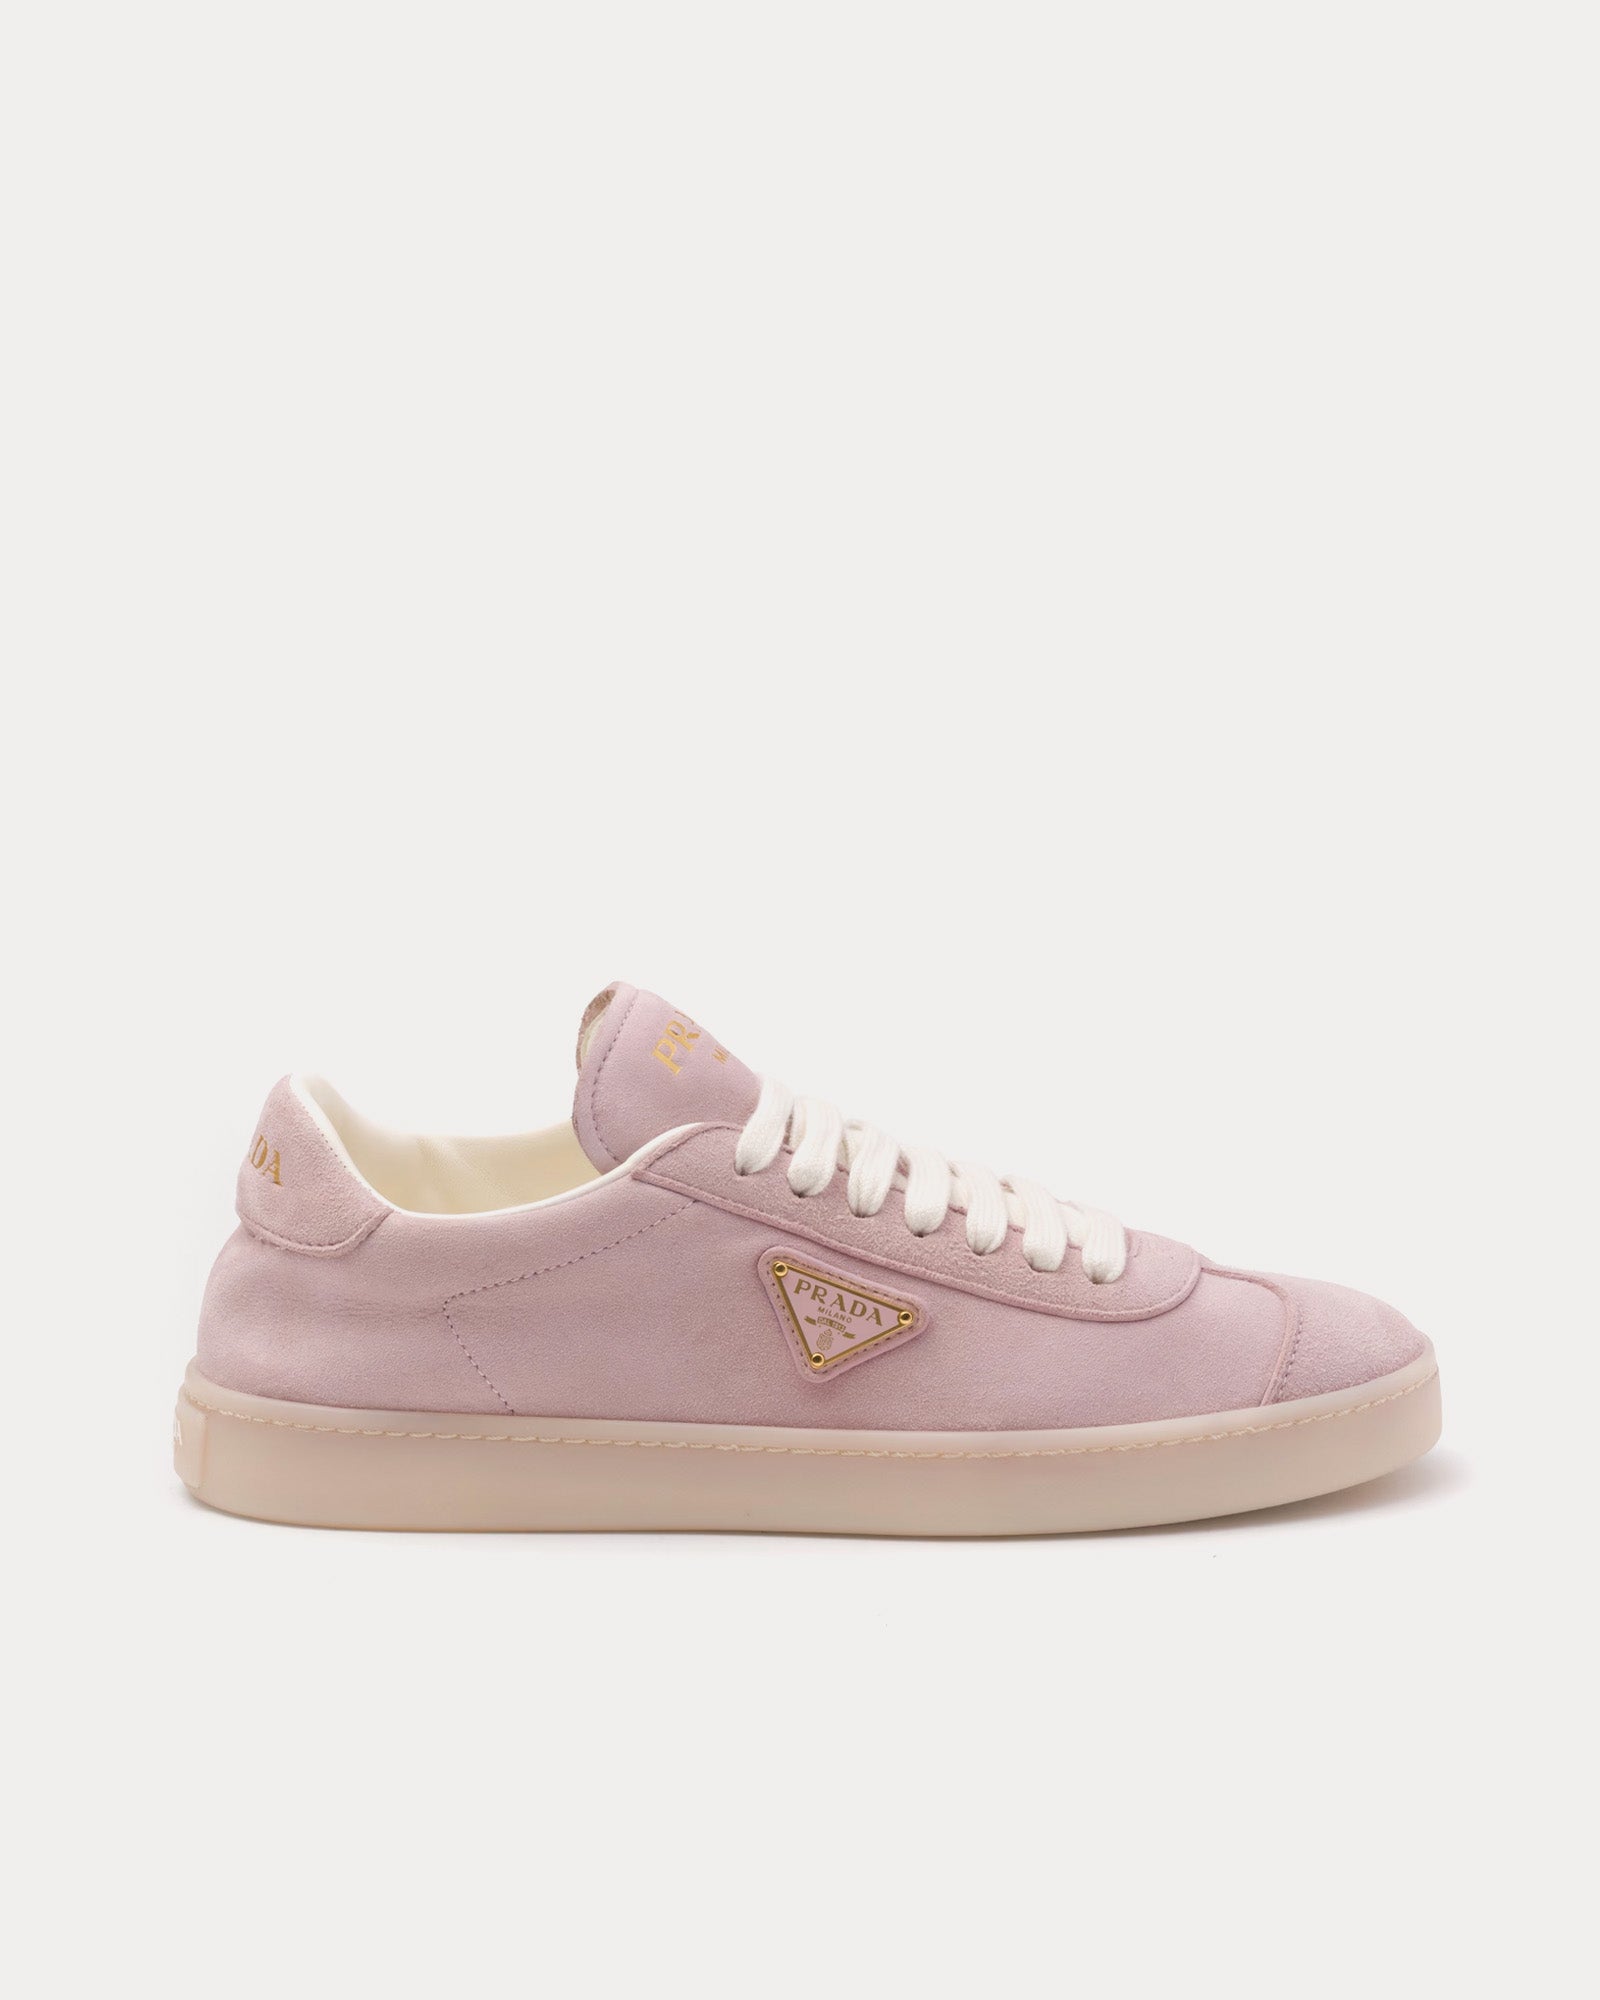 Prada - Lane Suede Alabaster Pink Low Top Sneakers